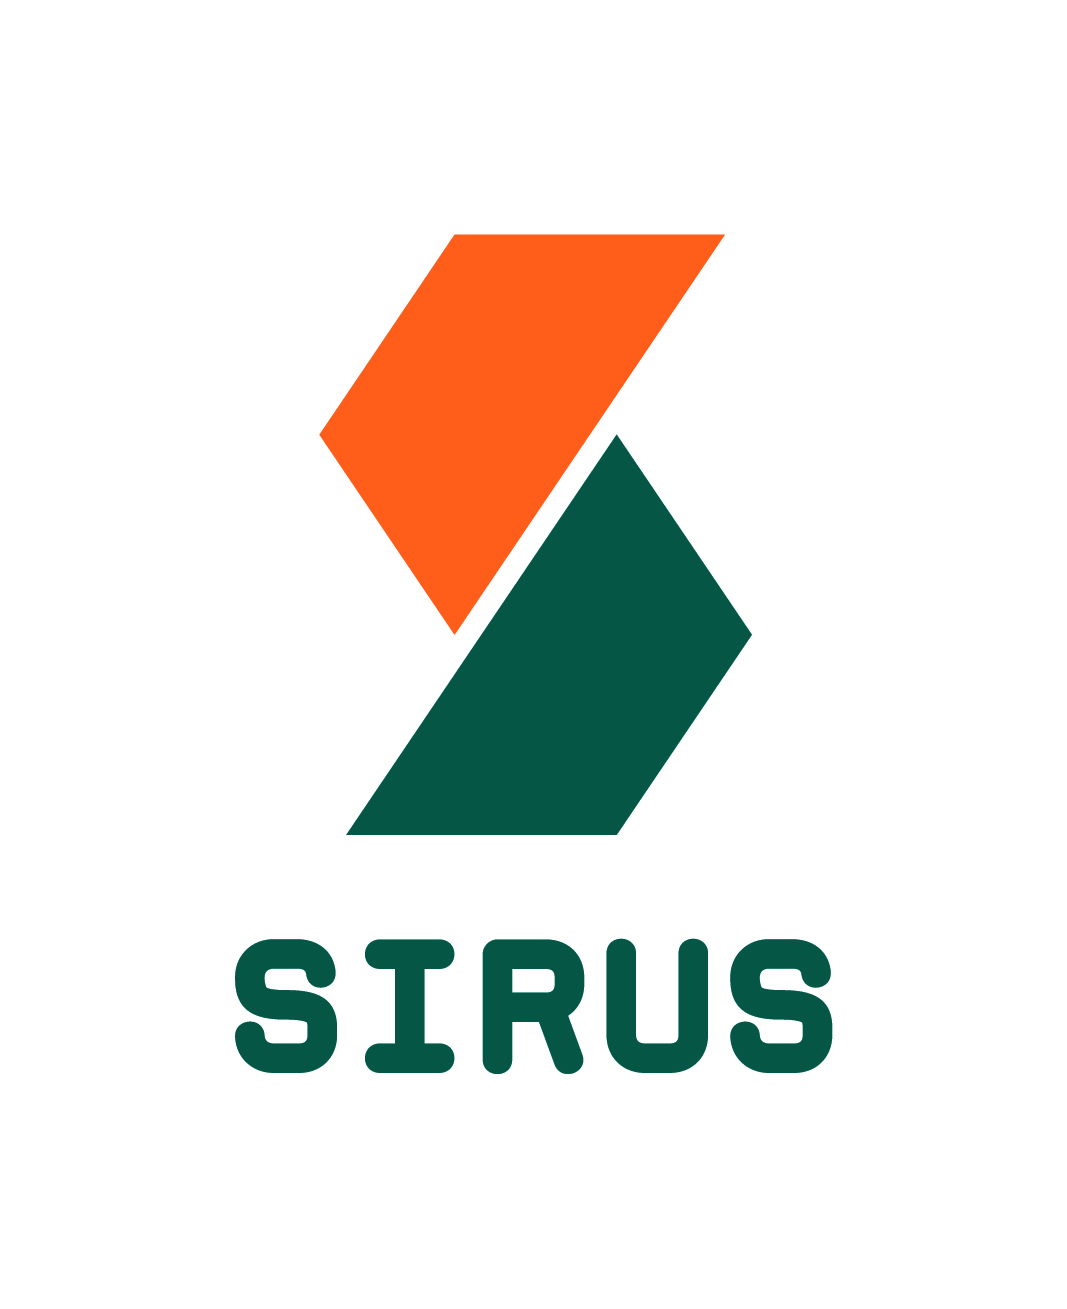 Sirus